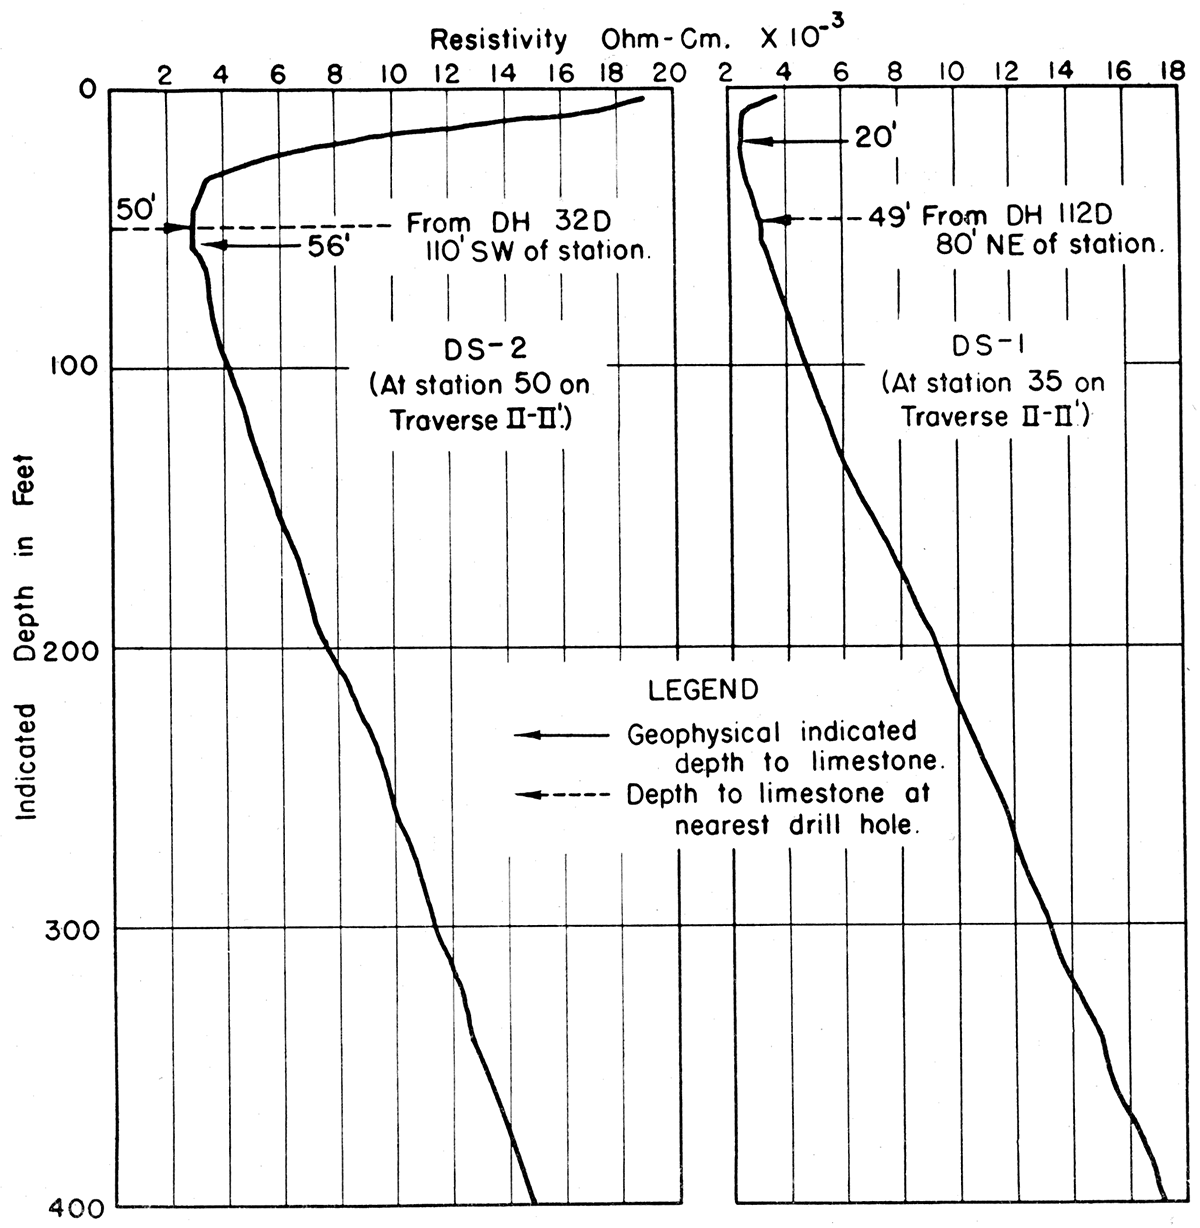 Resistivity depth profiles in the Swalley area.